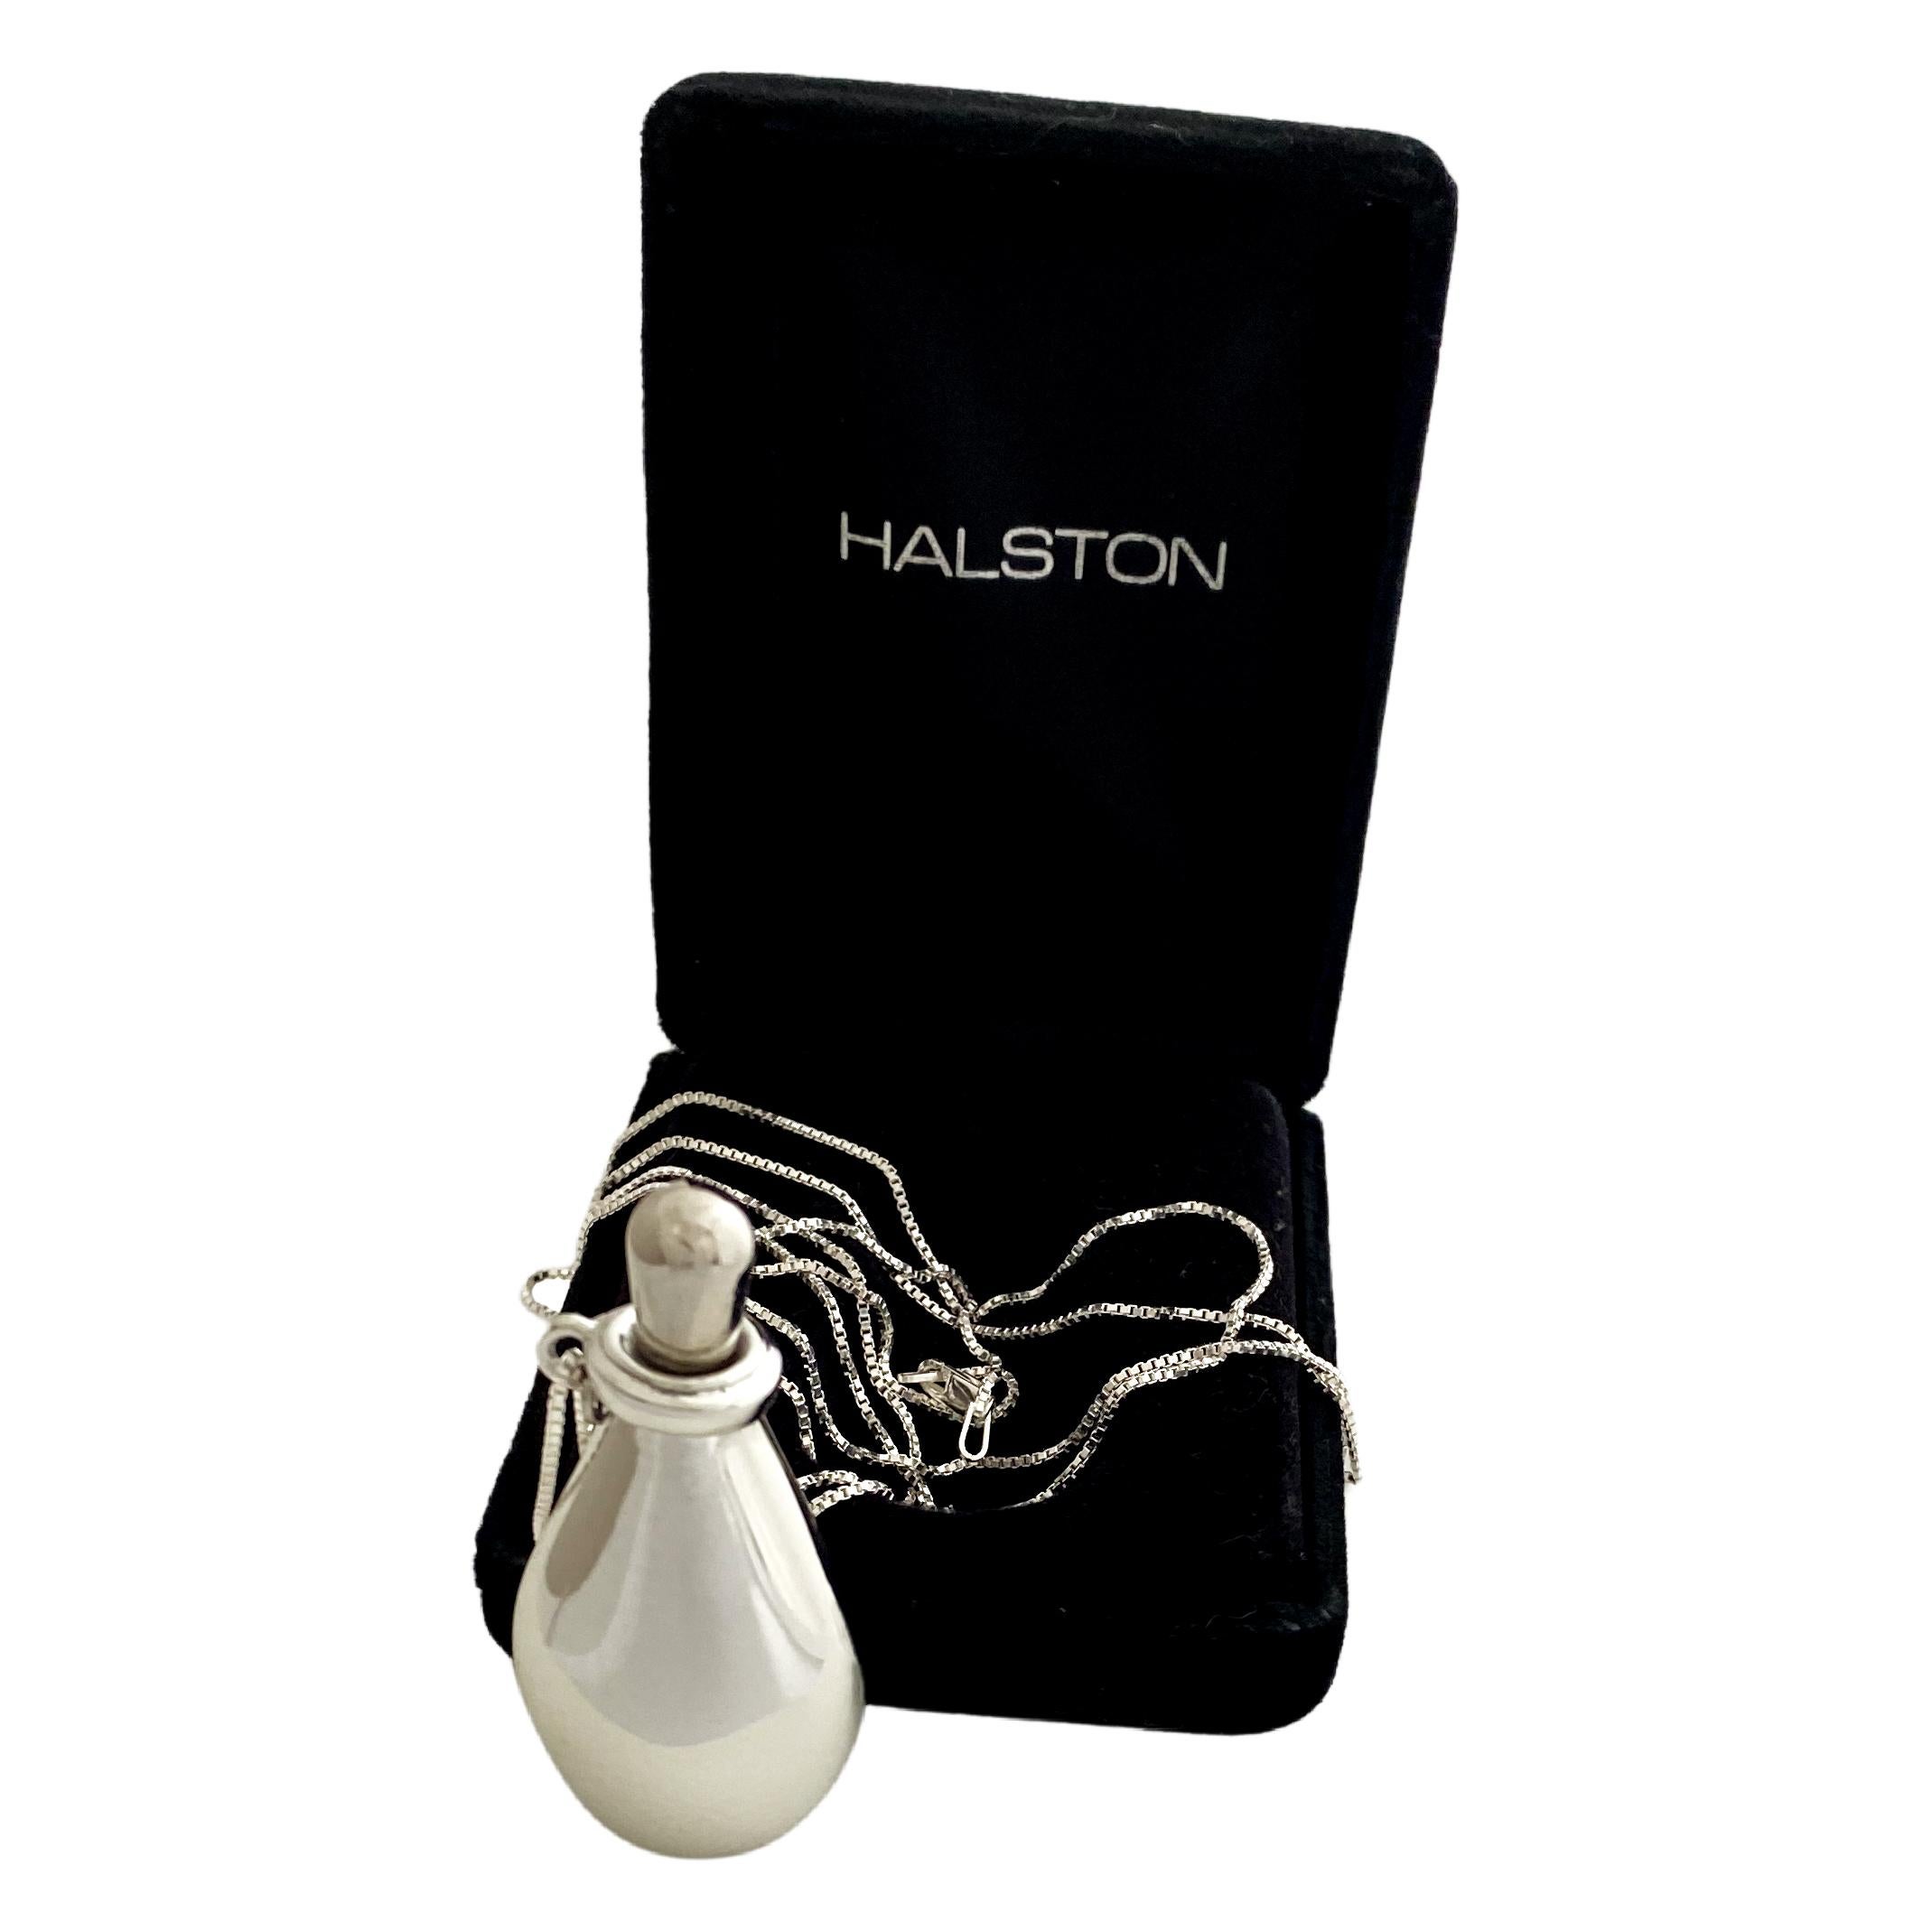 elsa peretti halston silver pendant perfume bottle necklace selectioncoste master